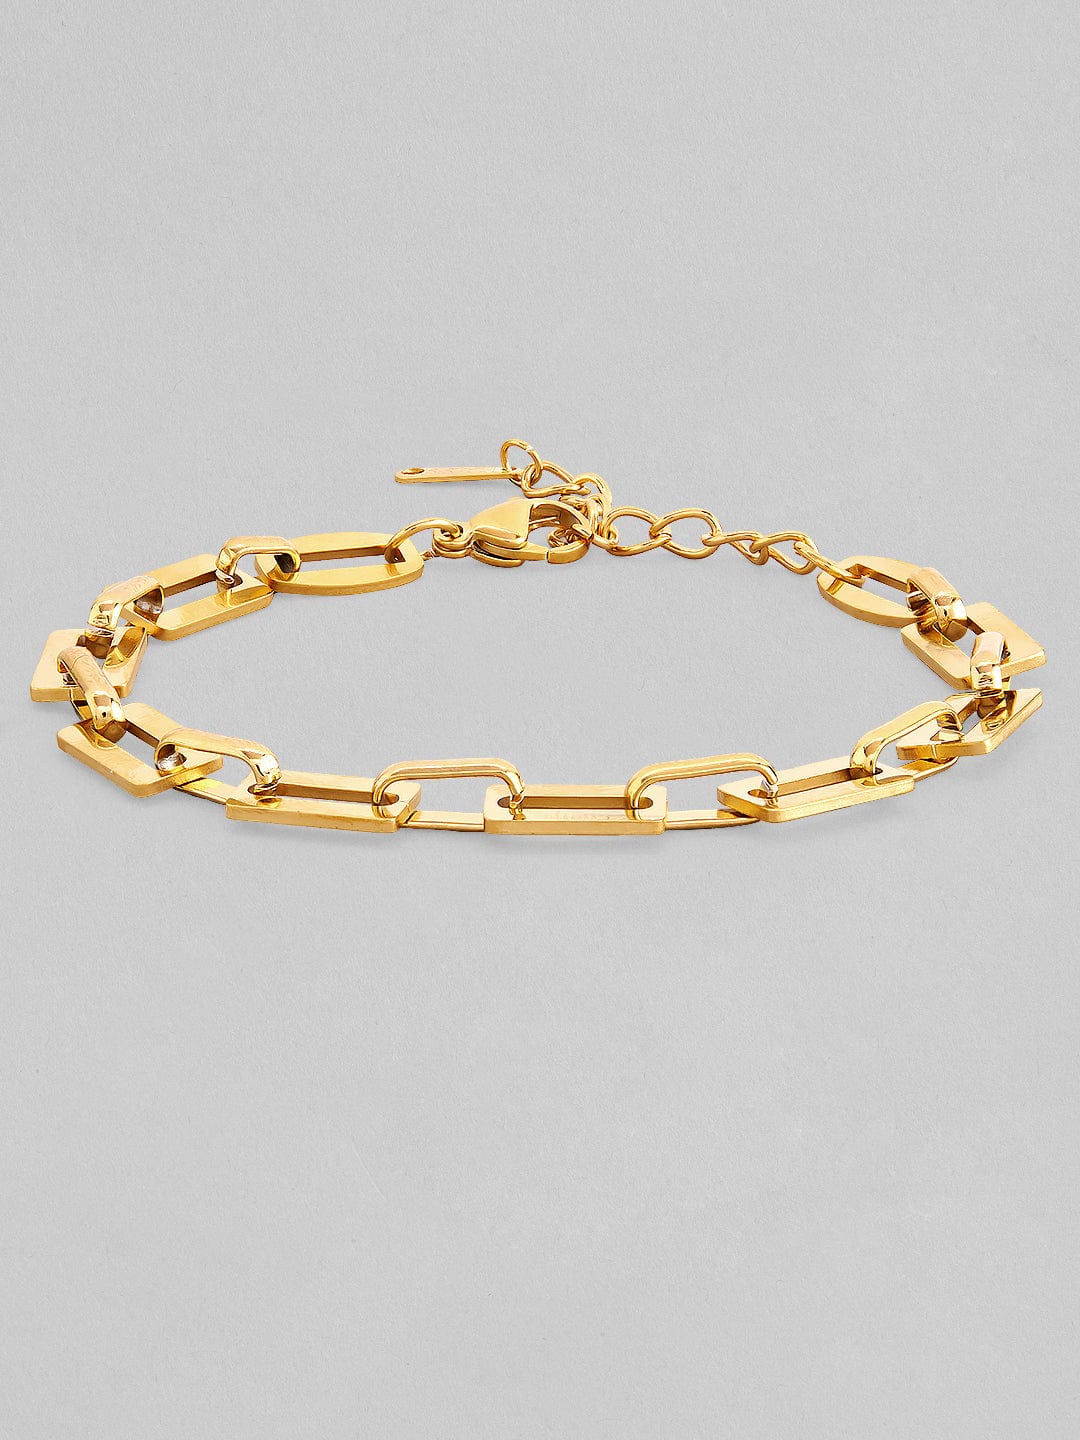 Rubans Voguish 18K Gold Plated Stainless Steel Waterproof Paperclip Chain Style Bracelet. Bracelets